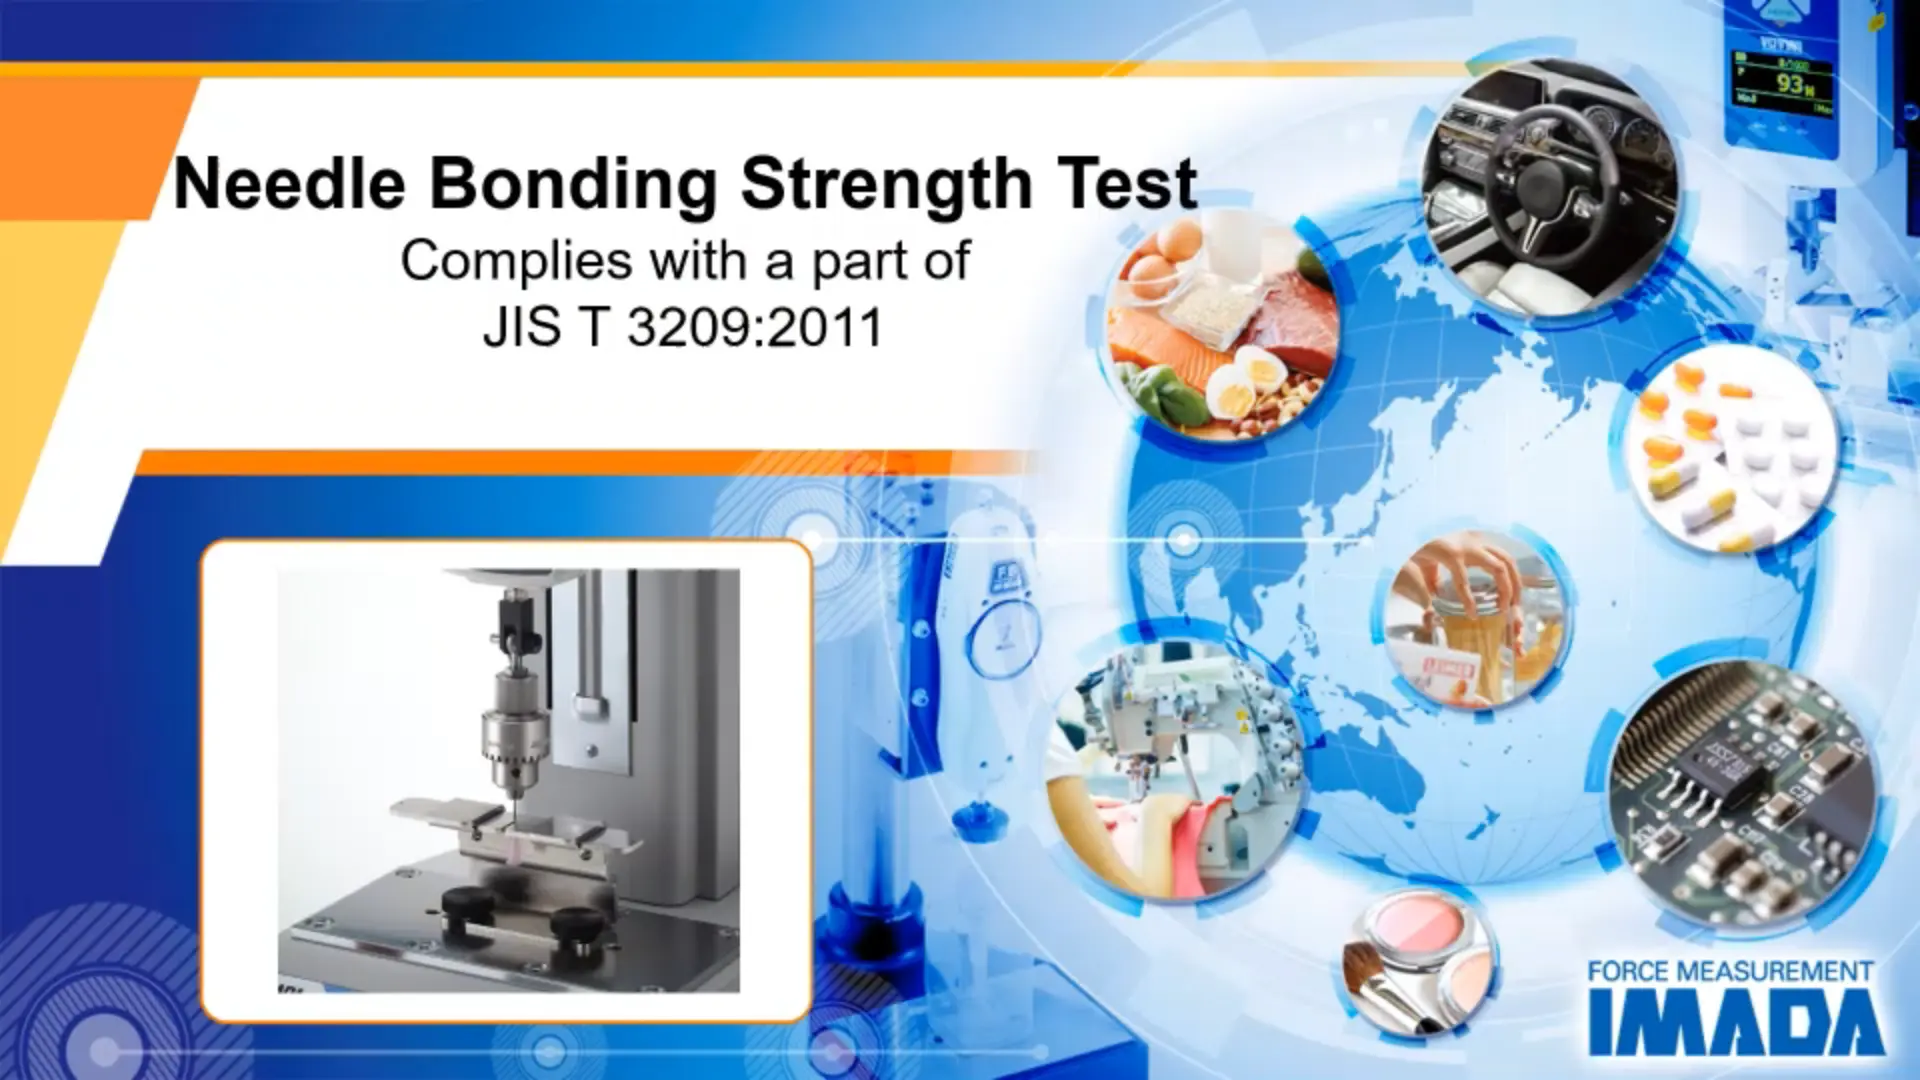 Needle bonding strength test